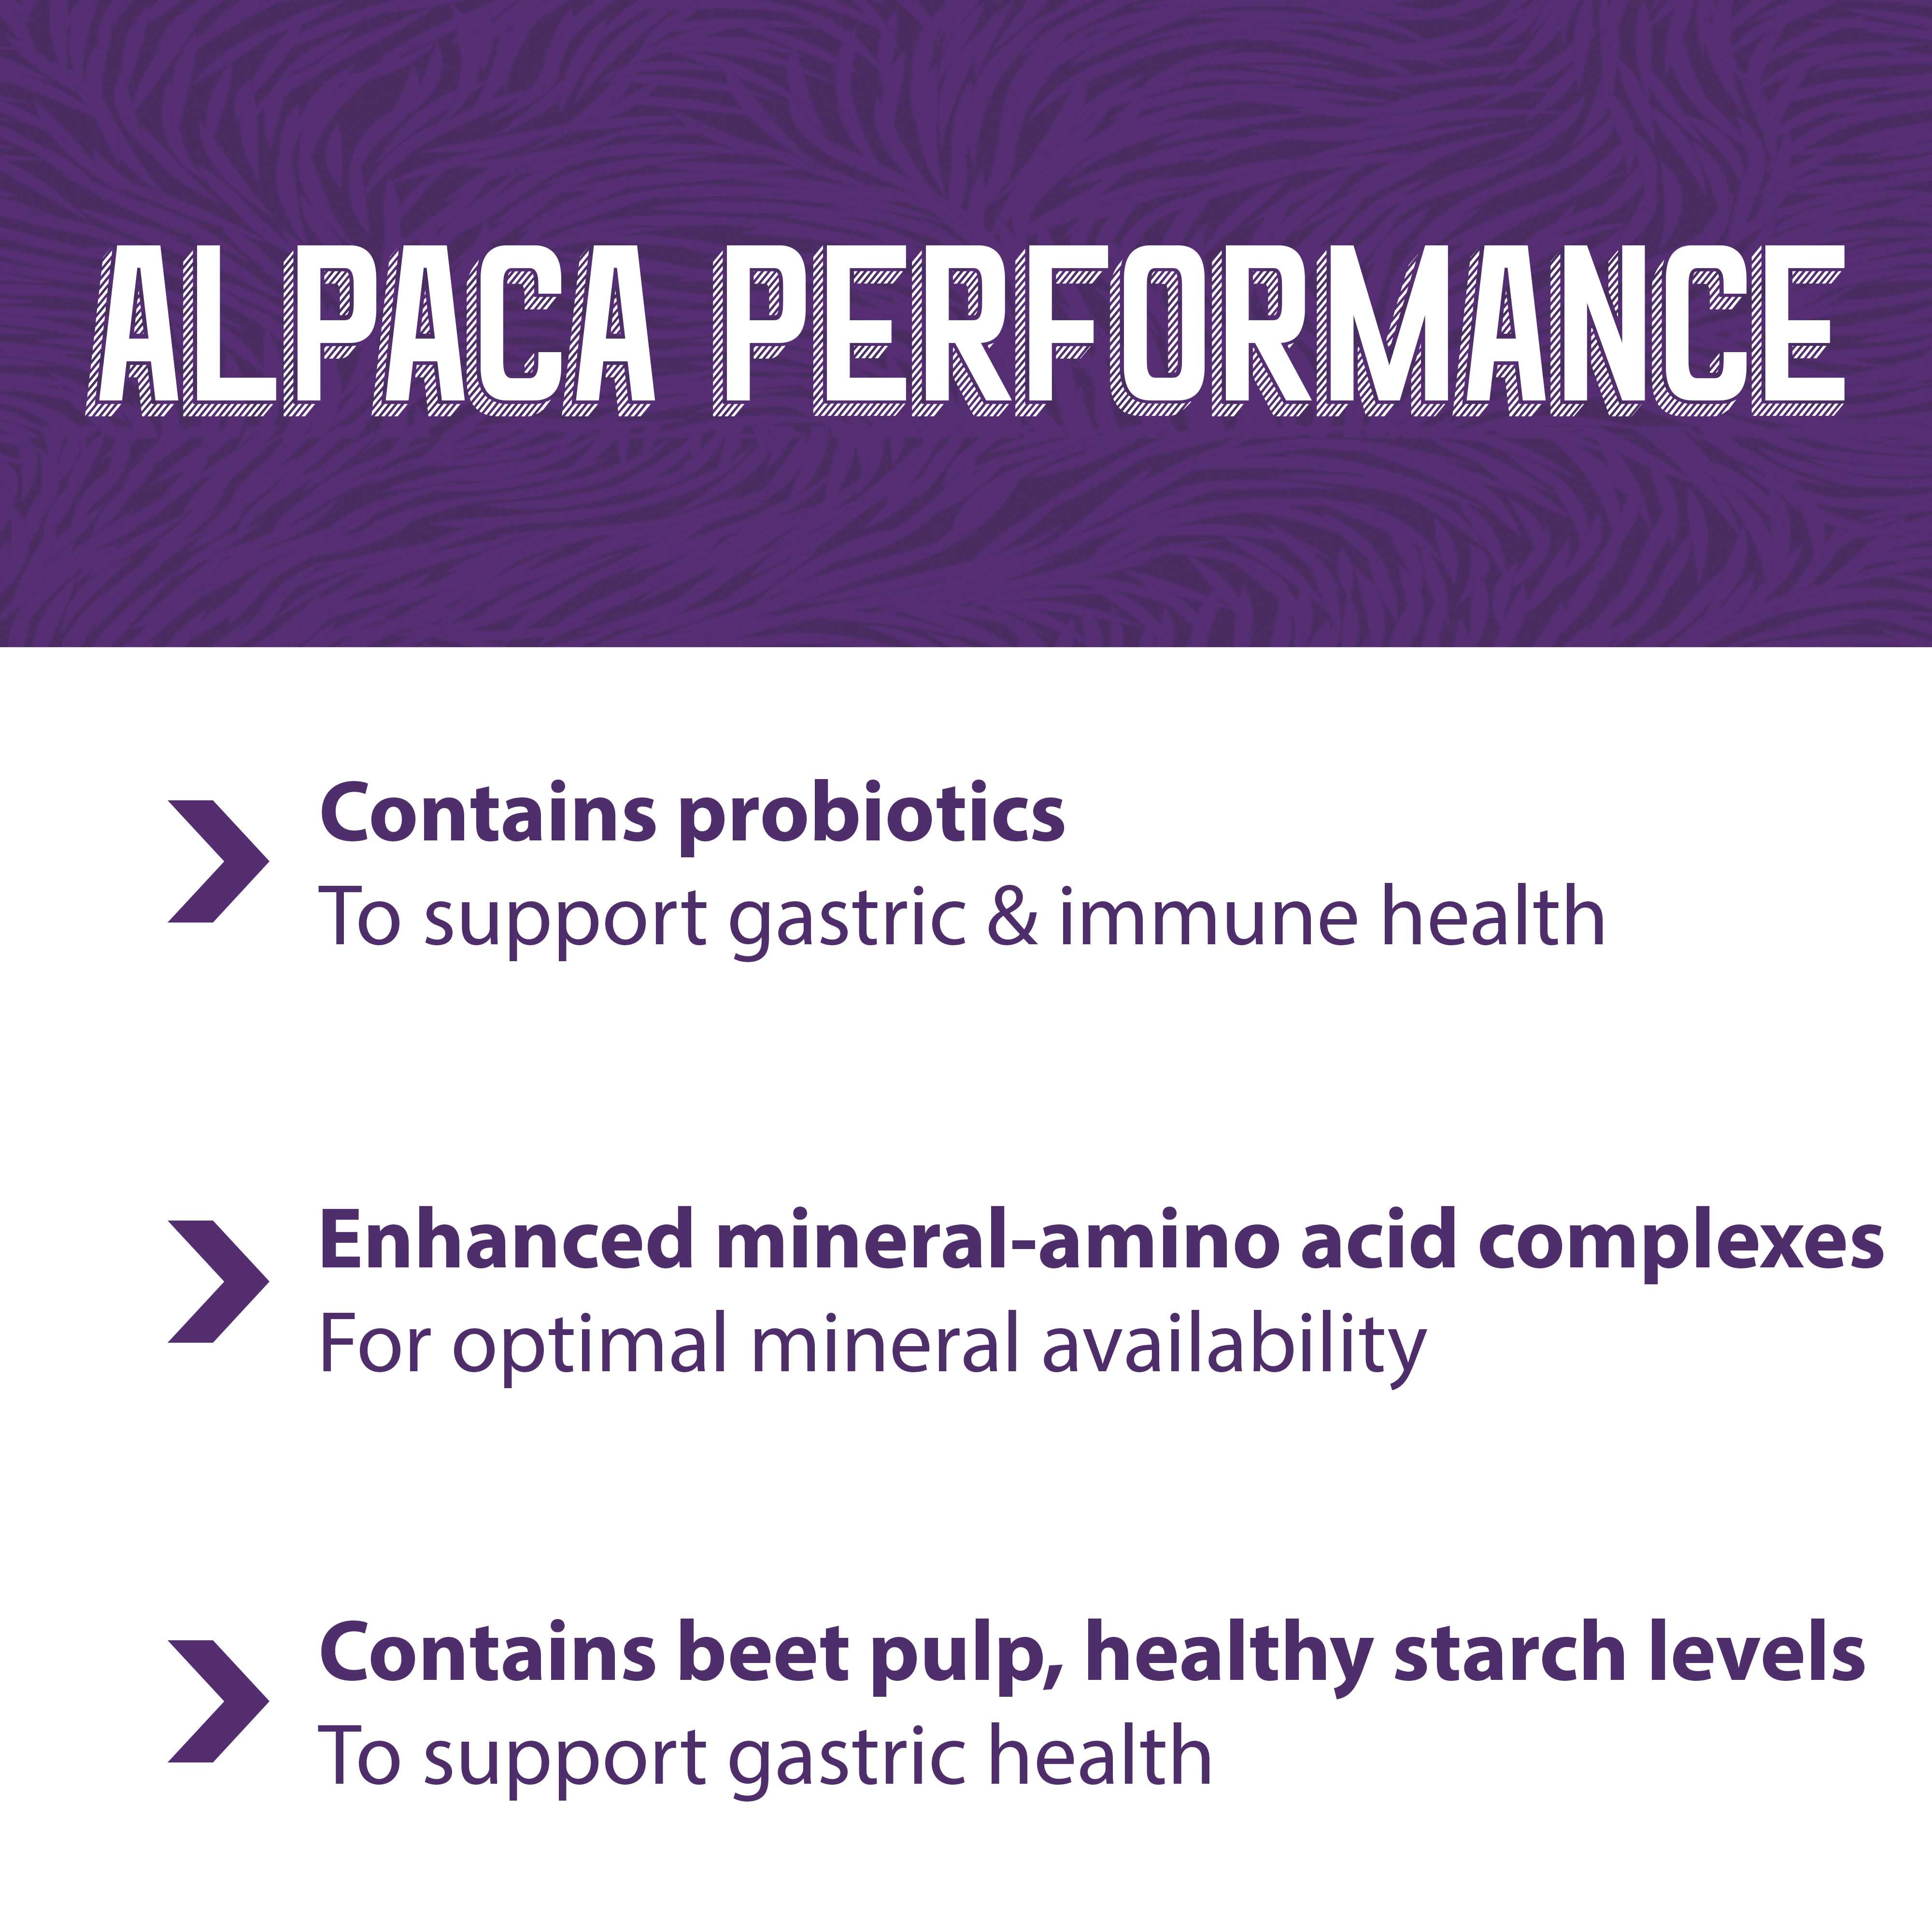 Alpaca performance contains probiotics